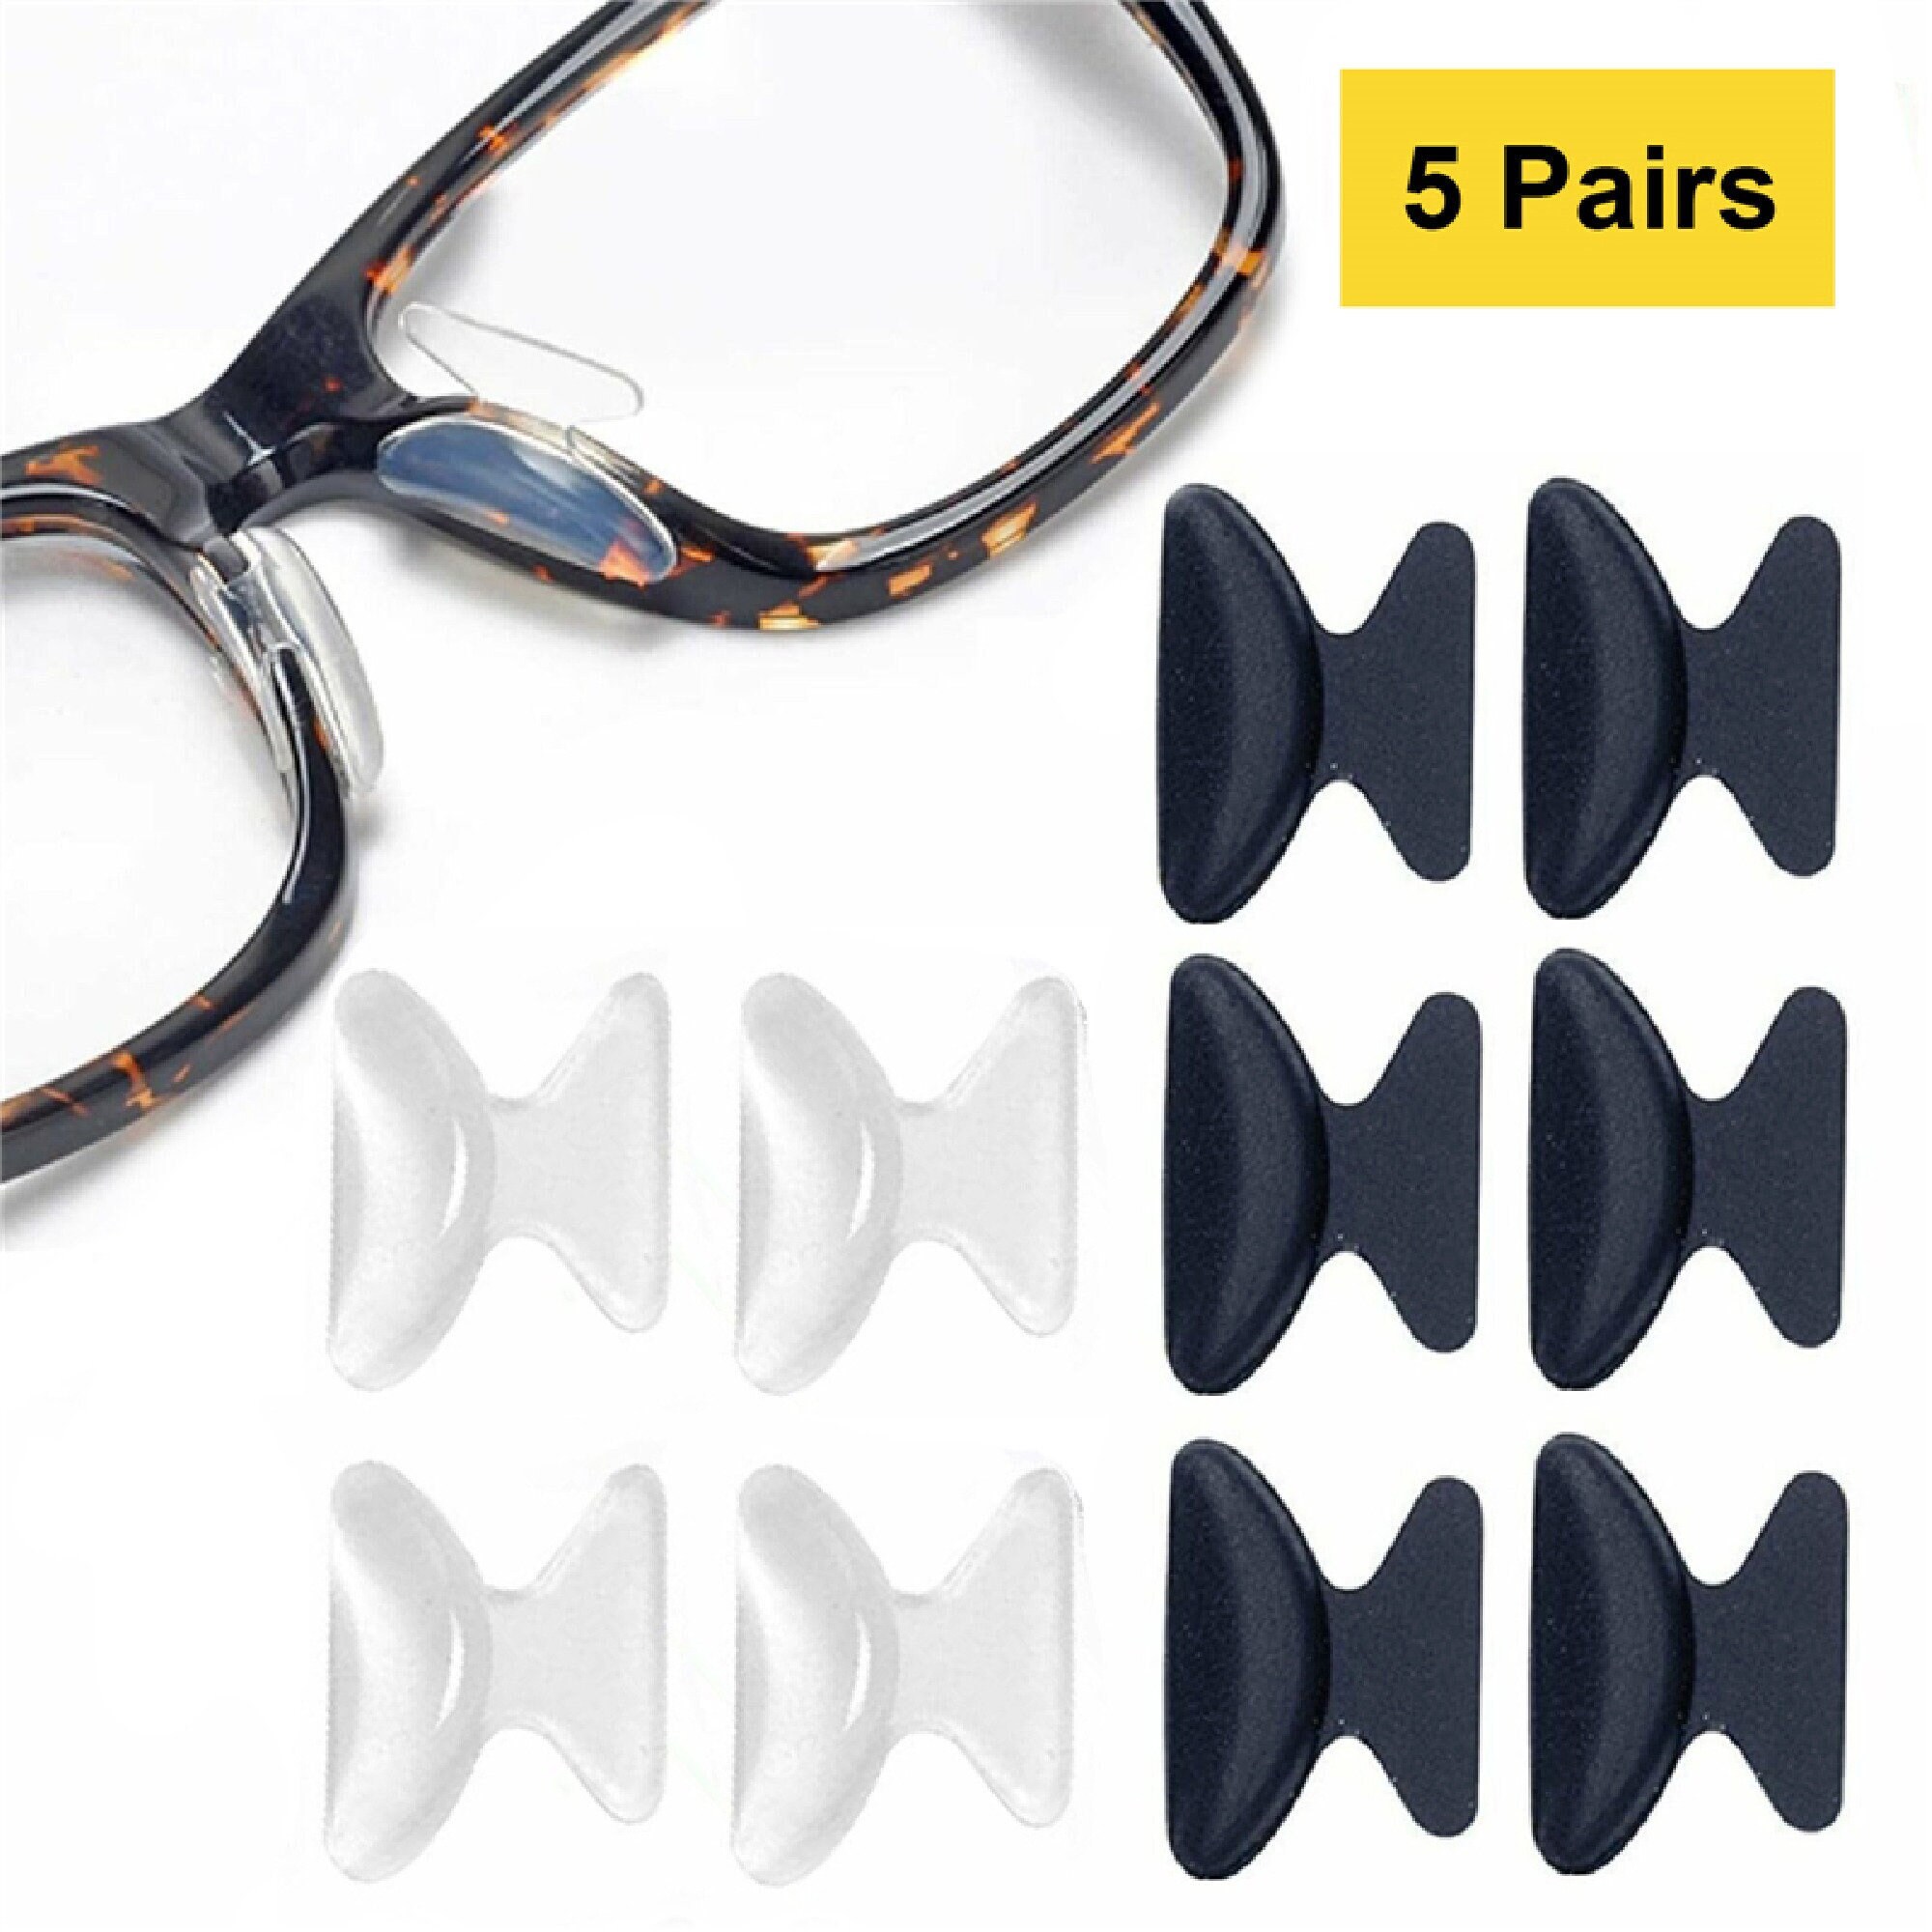 2pcs 16mm Wide Bridge Clear U Shaped Plastic Anti Slip Nose Pads Frame  Eyeglass Glasses Reading Specs Spectacles Transparent Slot on in Part 